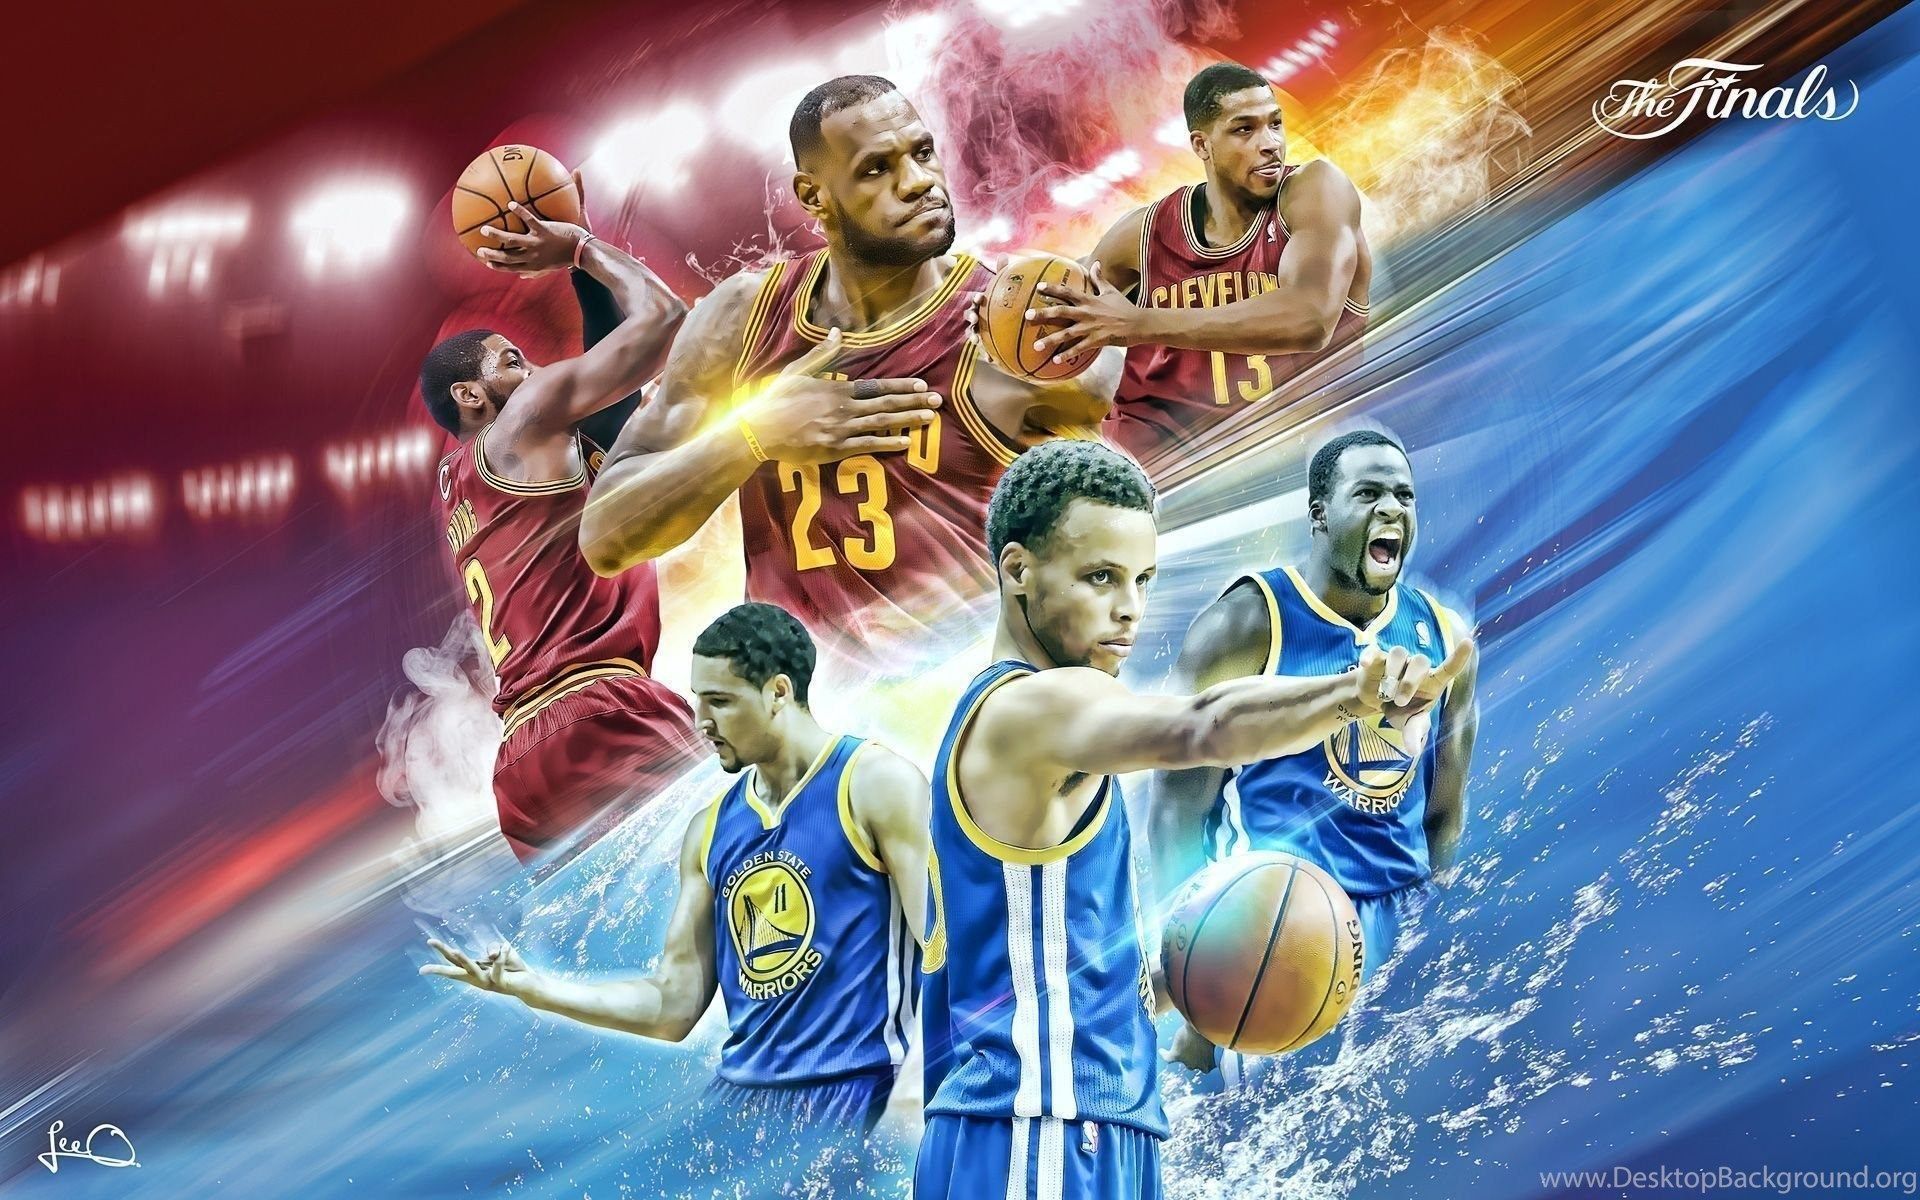 Epic Cool Basketball Wallpaper